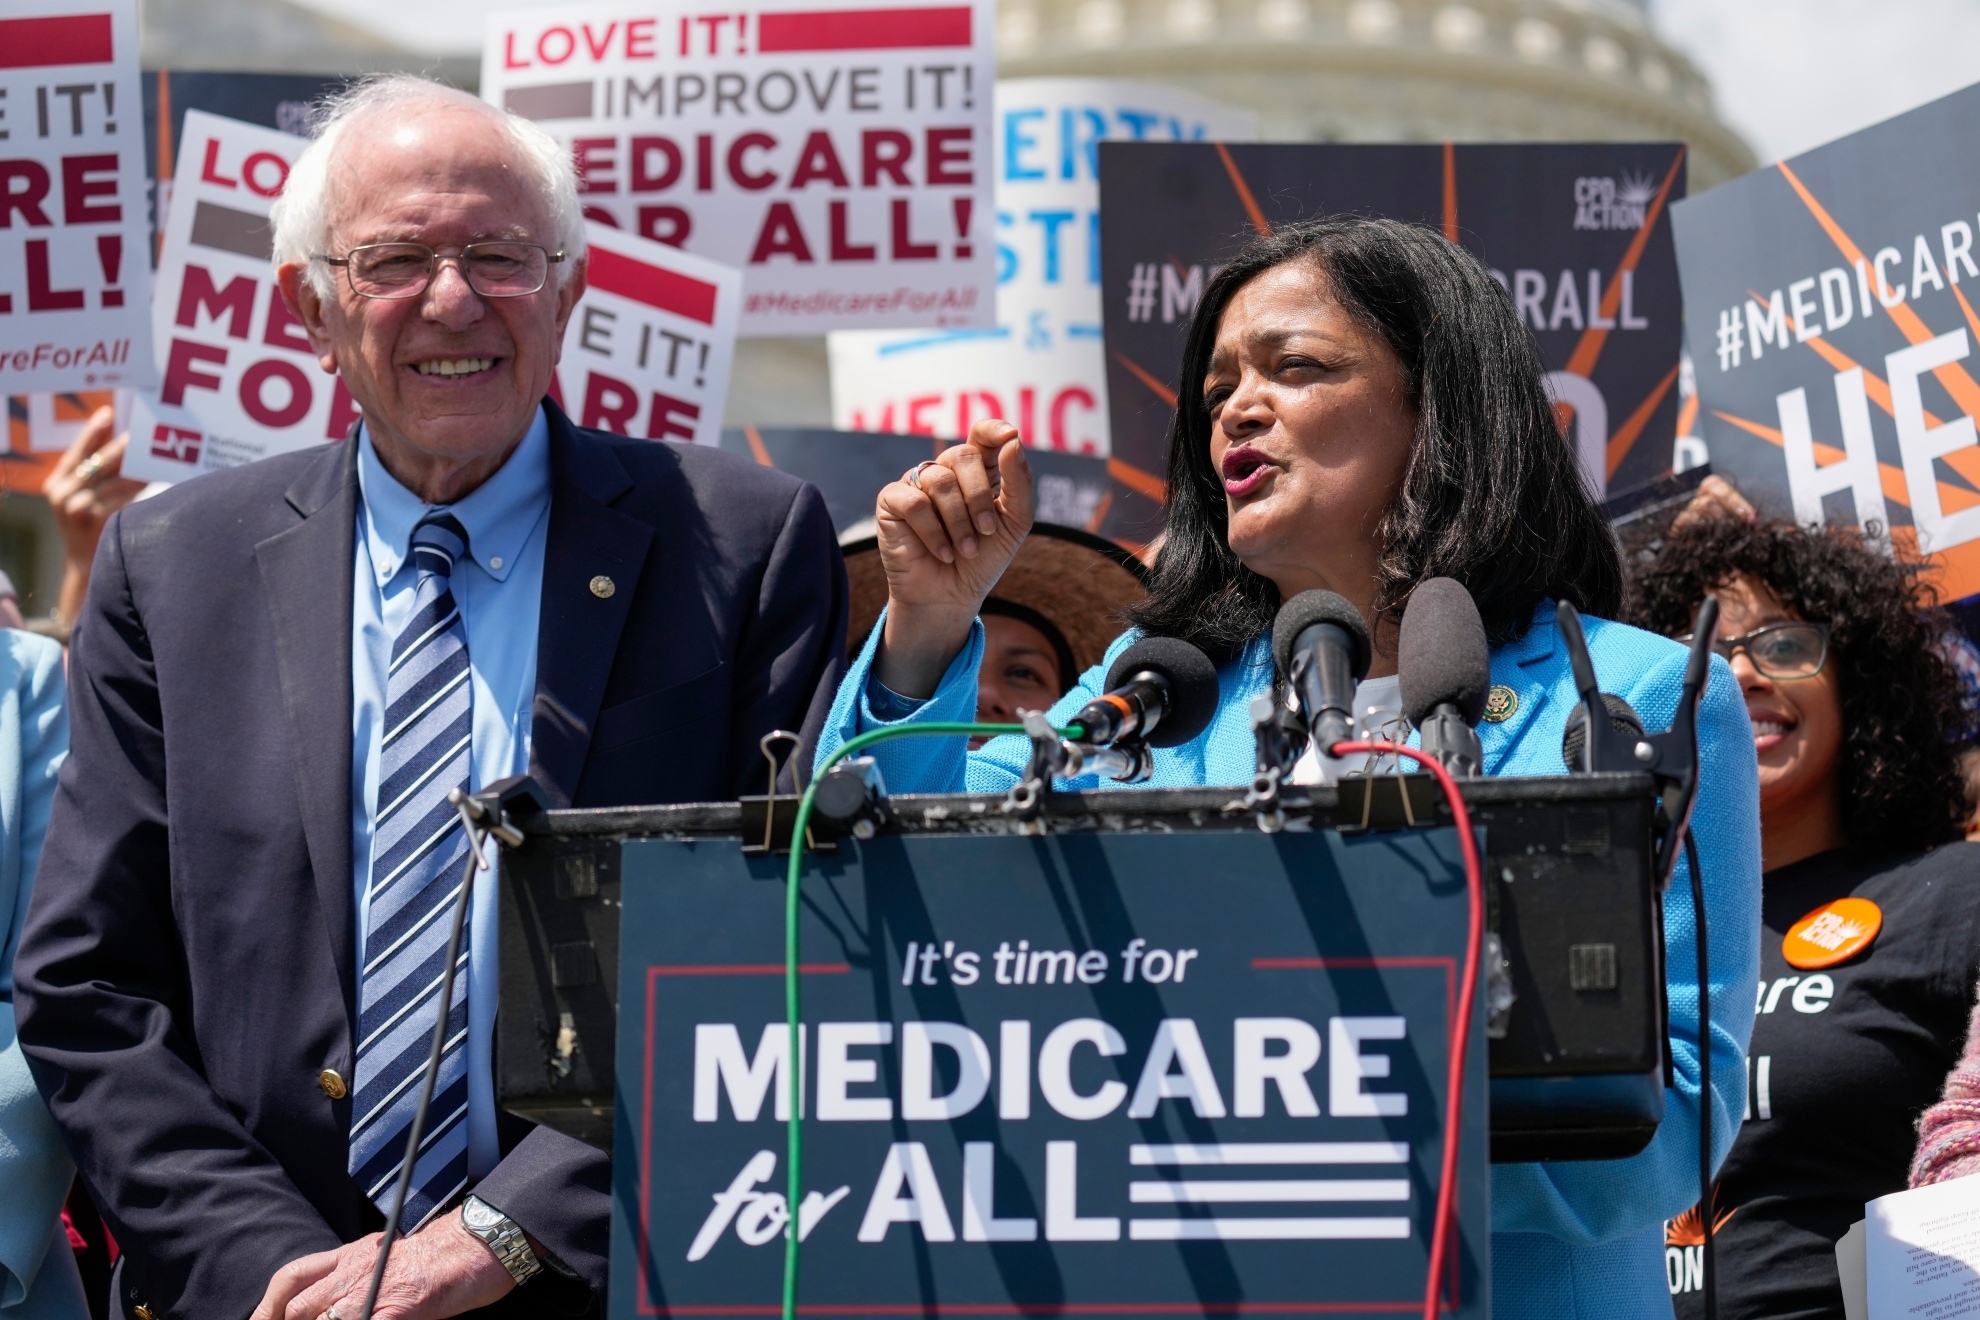 Senator BErnie Sanders supporting Medicare